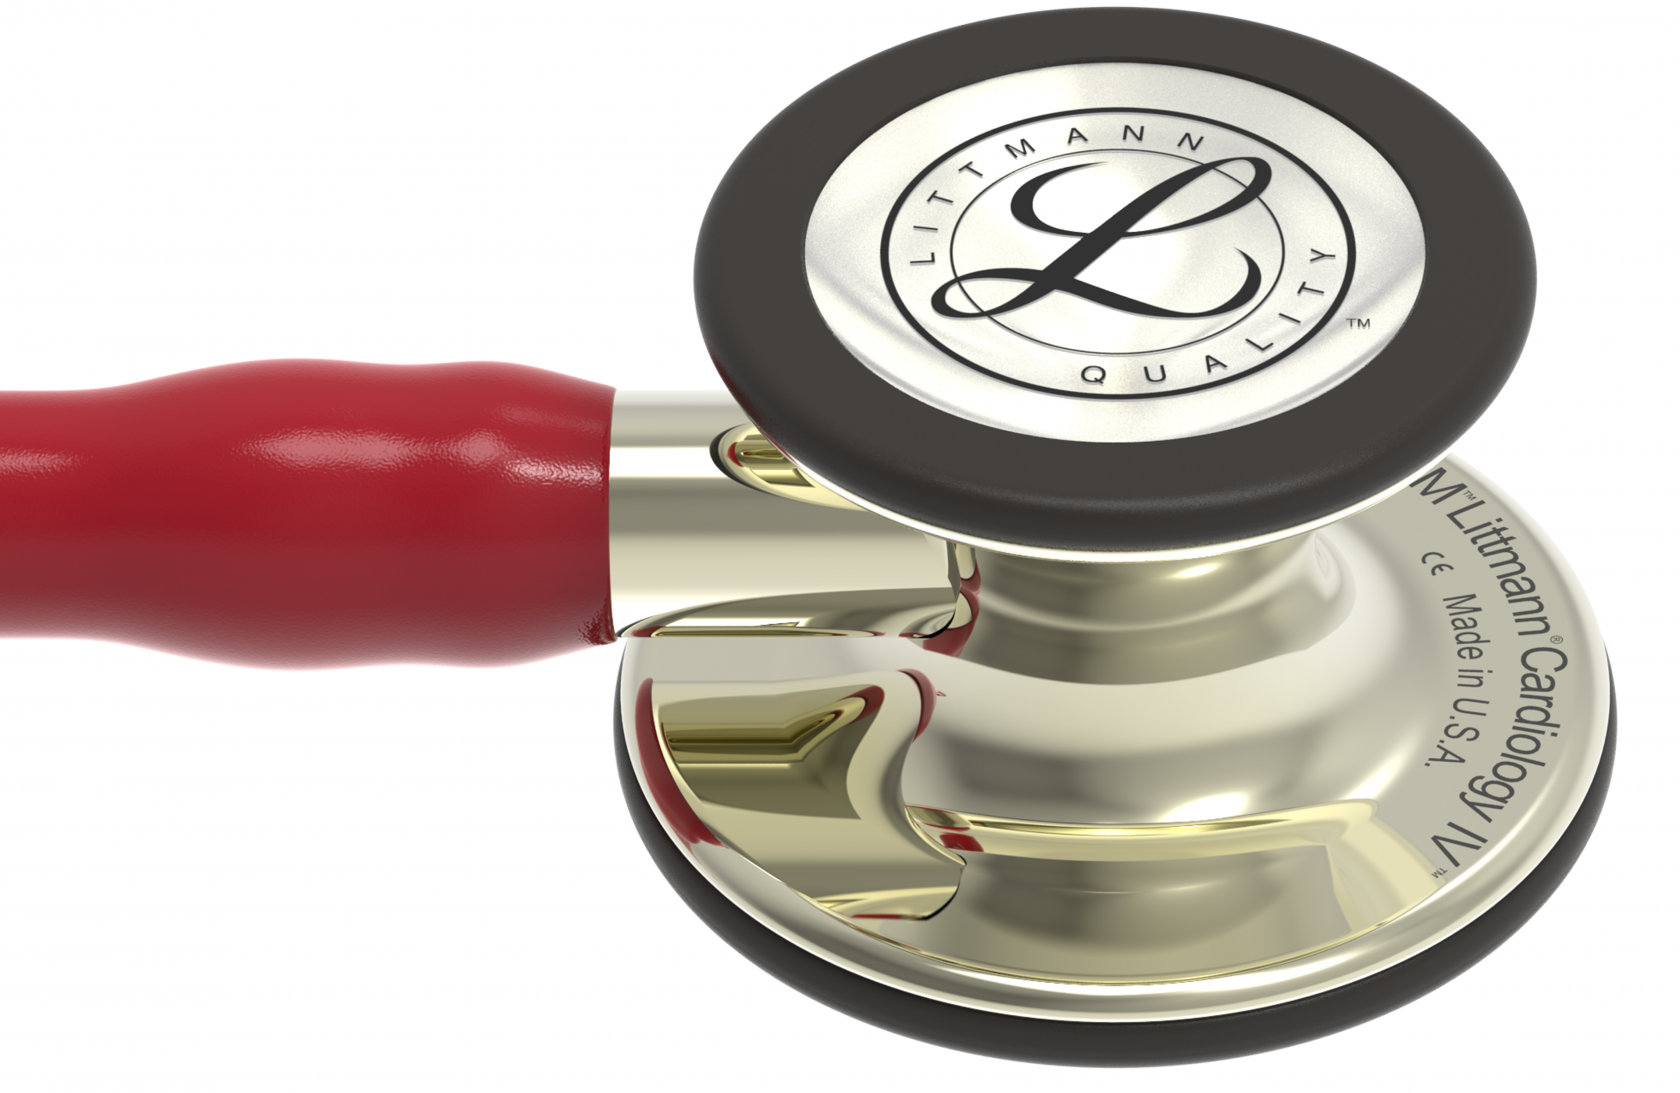 3M Stethoscope Littmann Cardiology IV Burgundy with Champagne Finish image 1